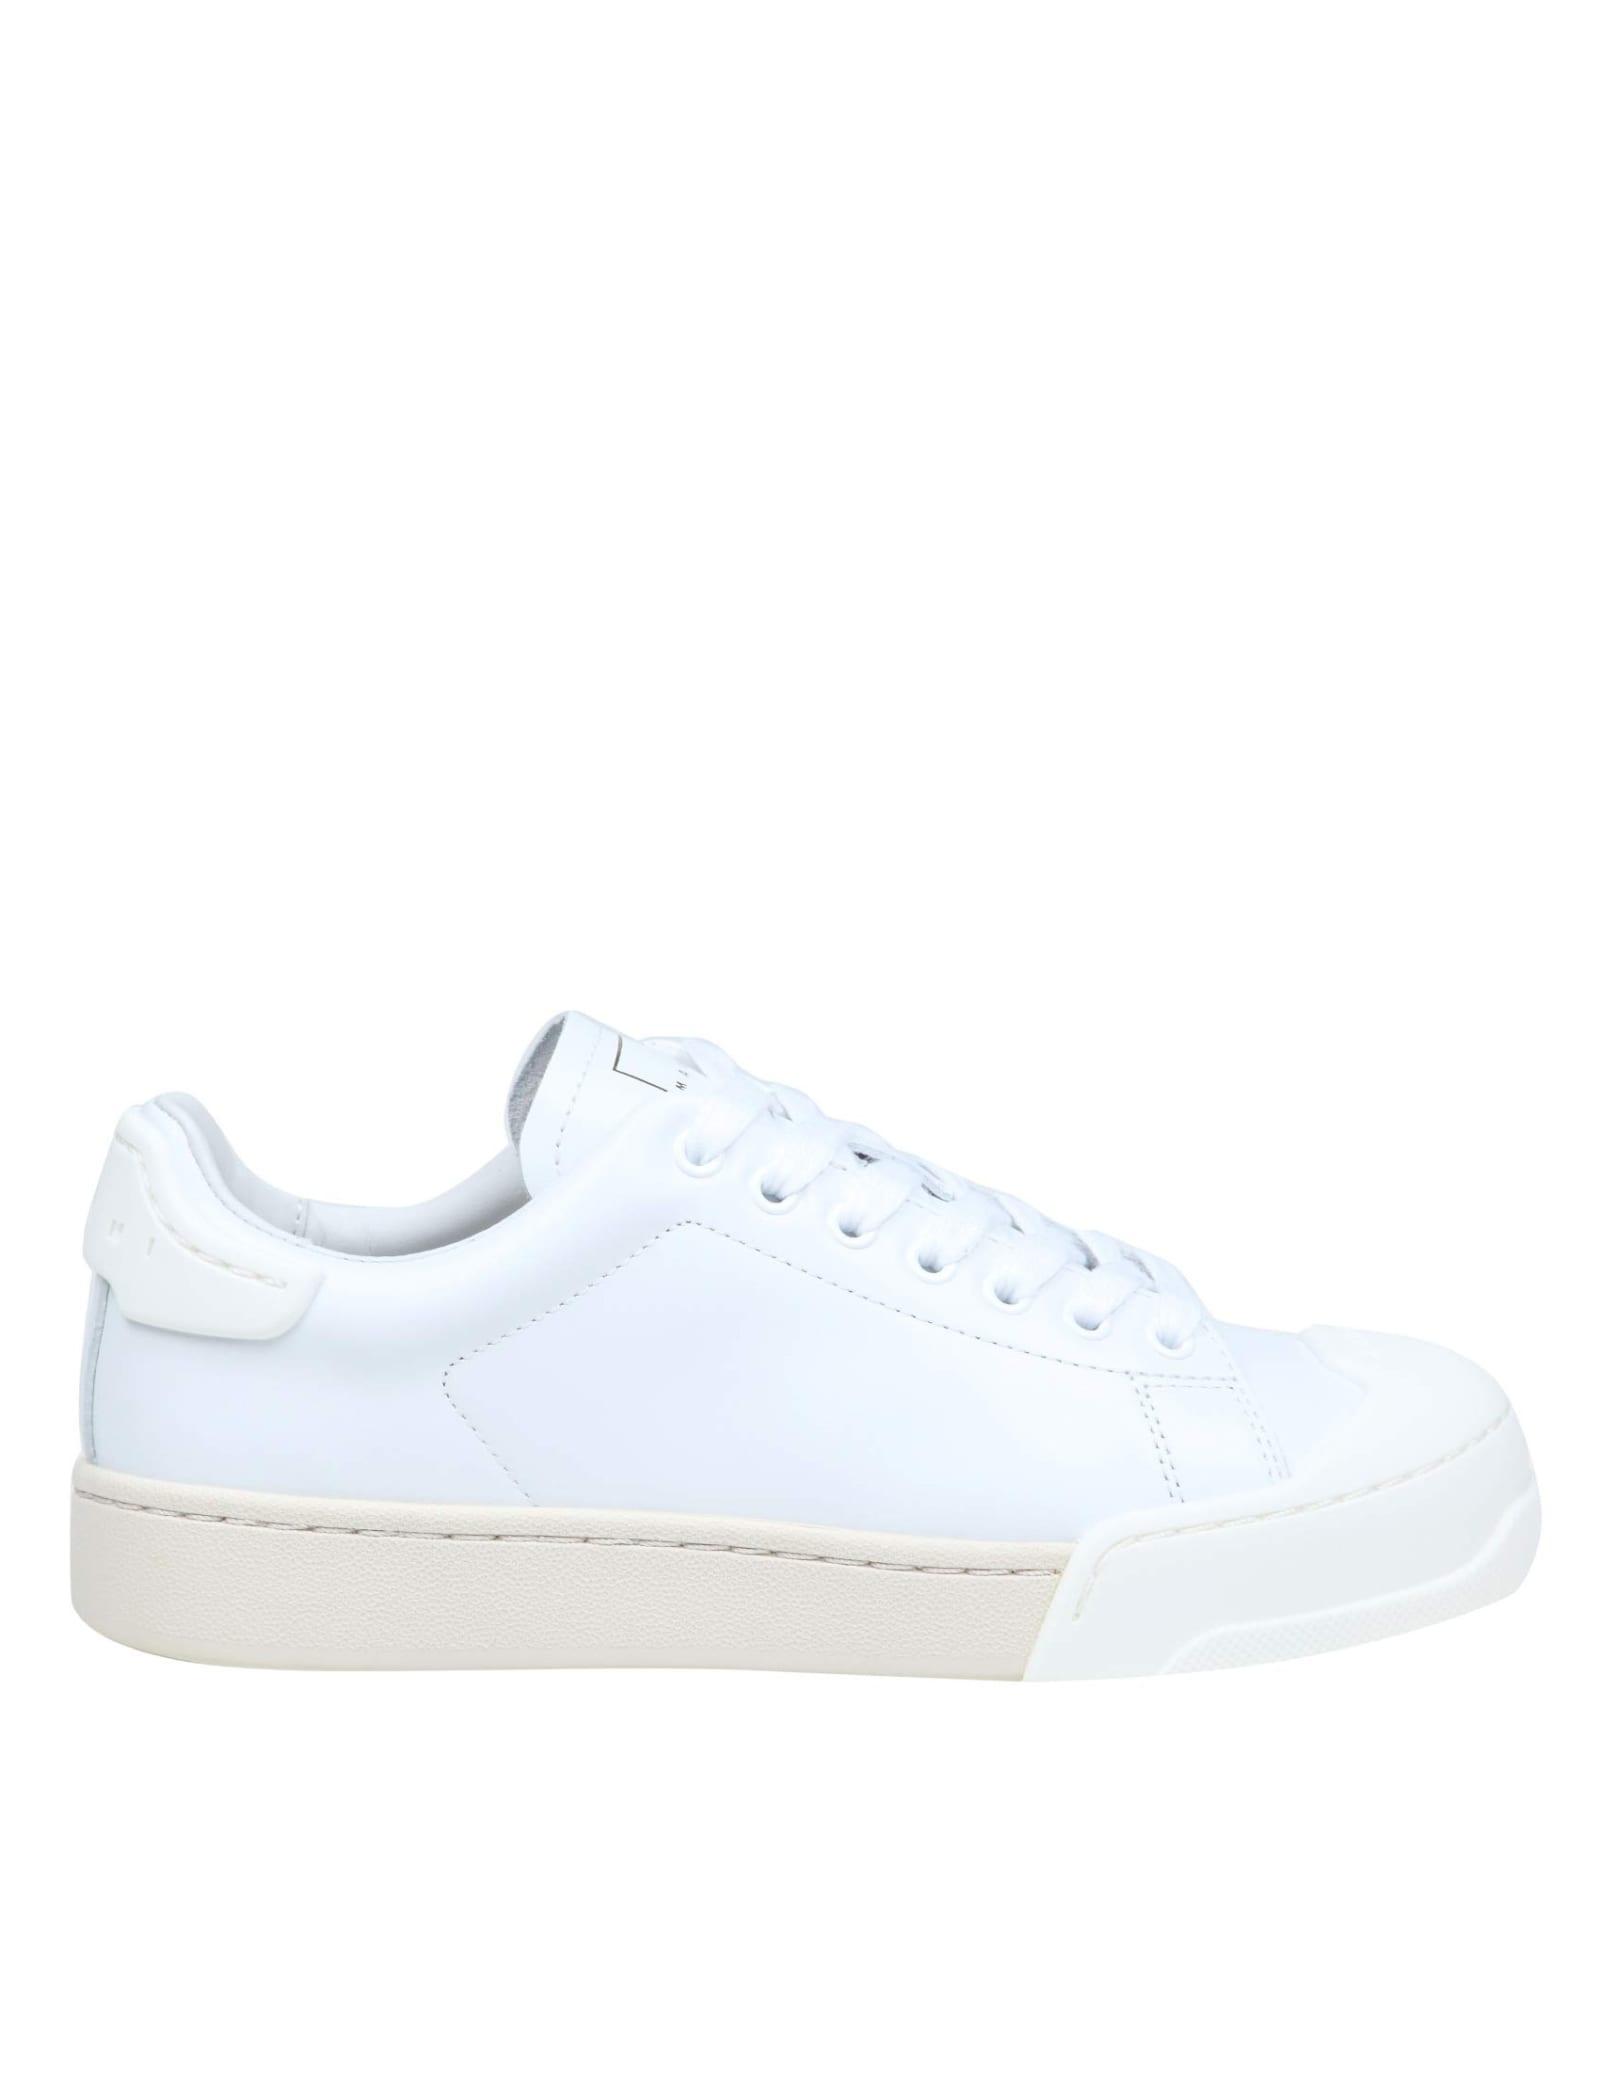 Marni Dada Bumper Sneakers In White Leather | Lyst